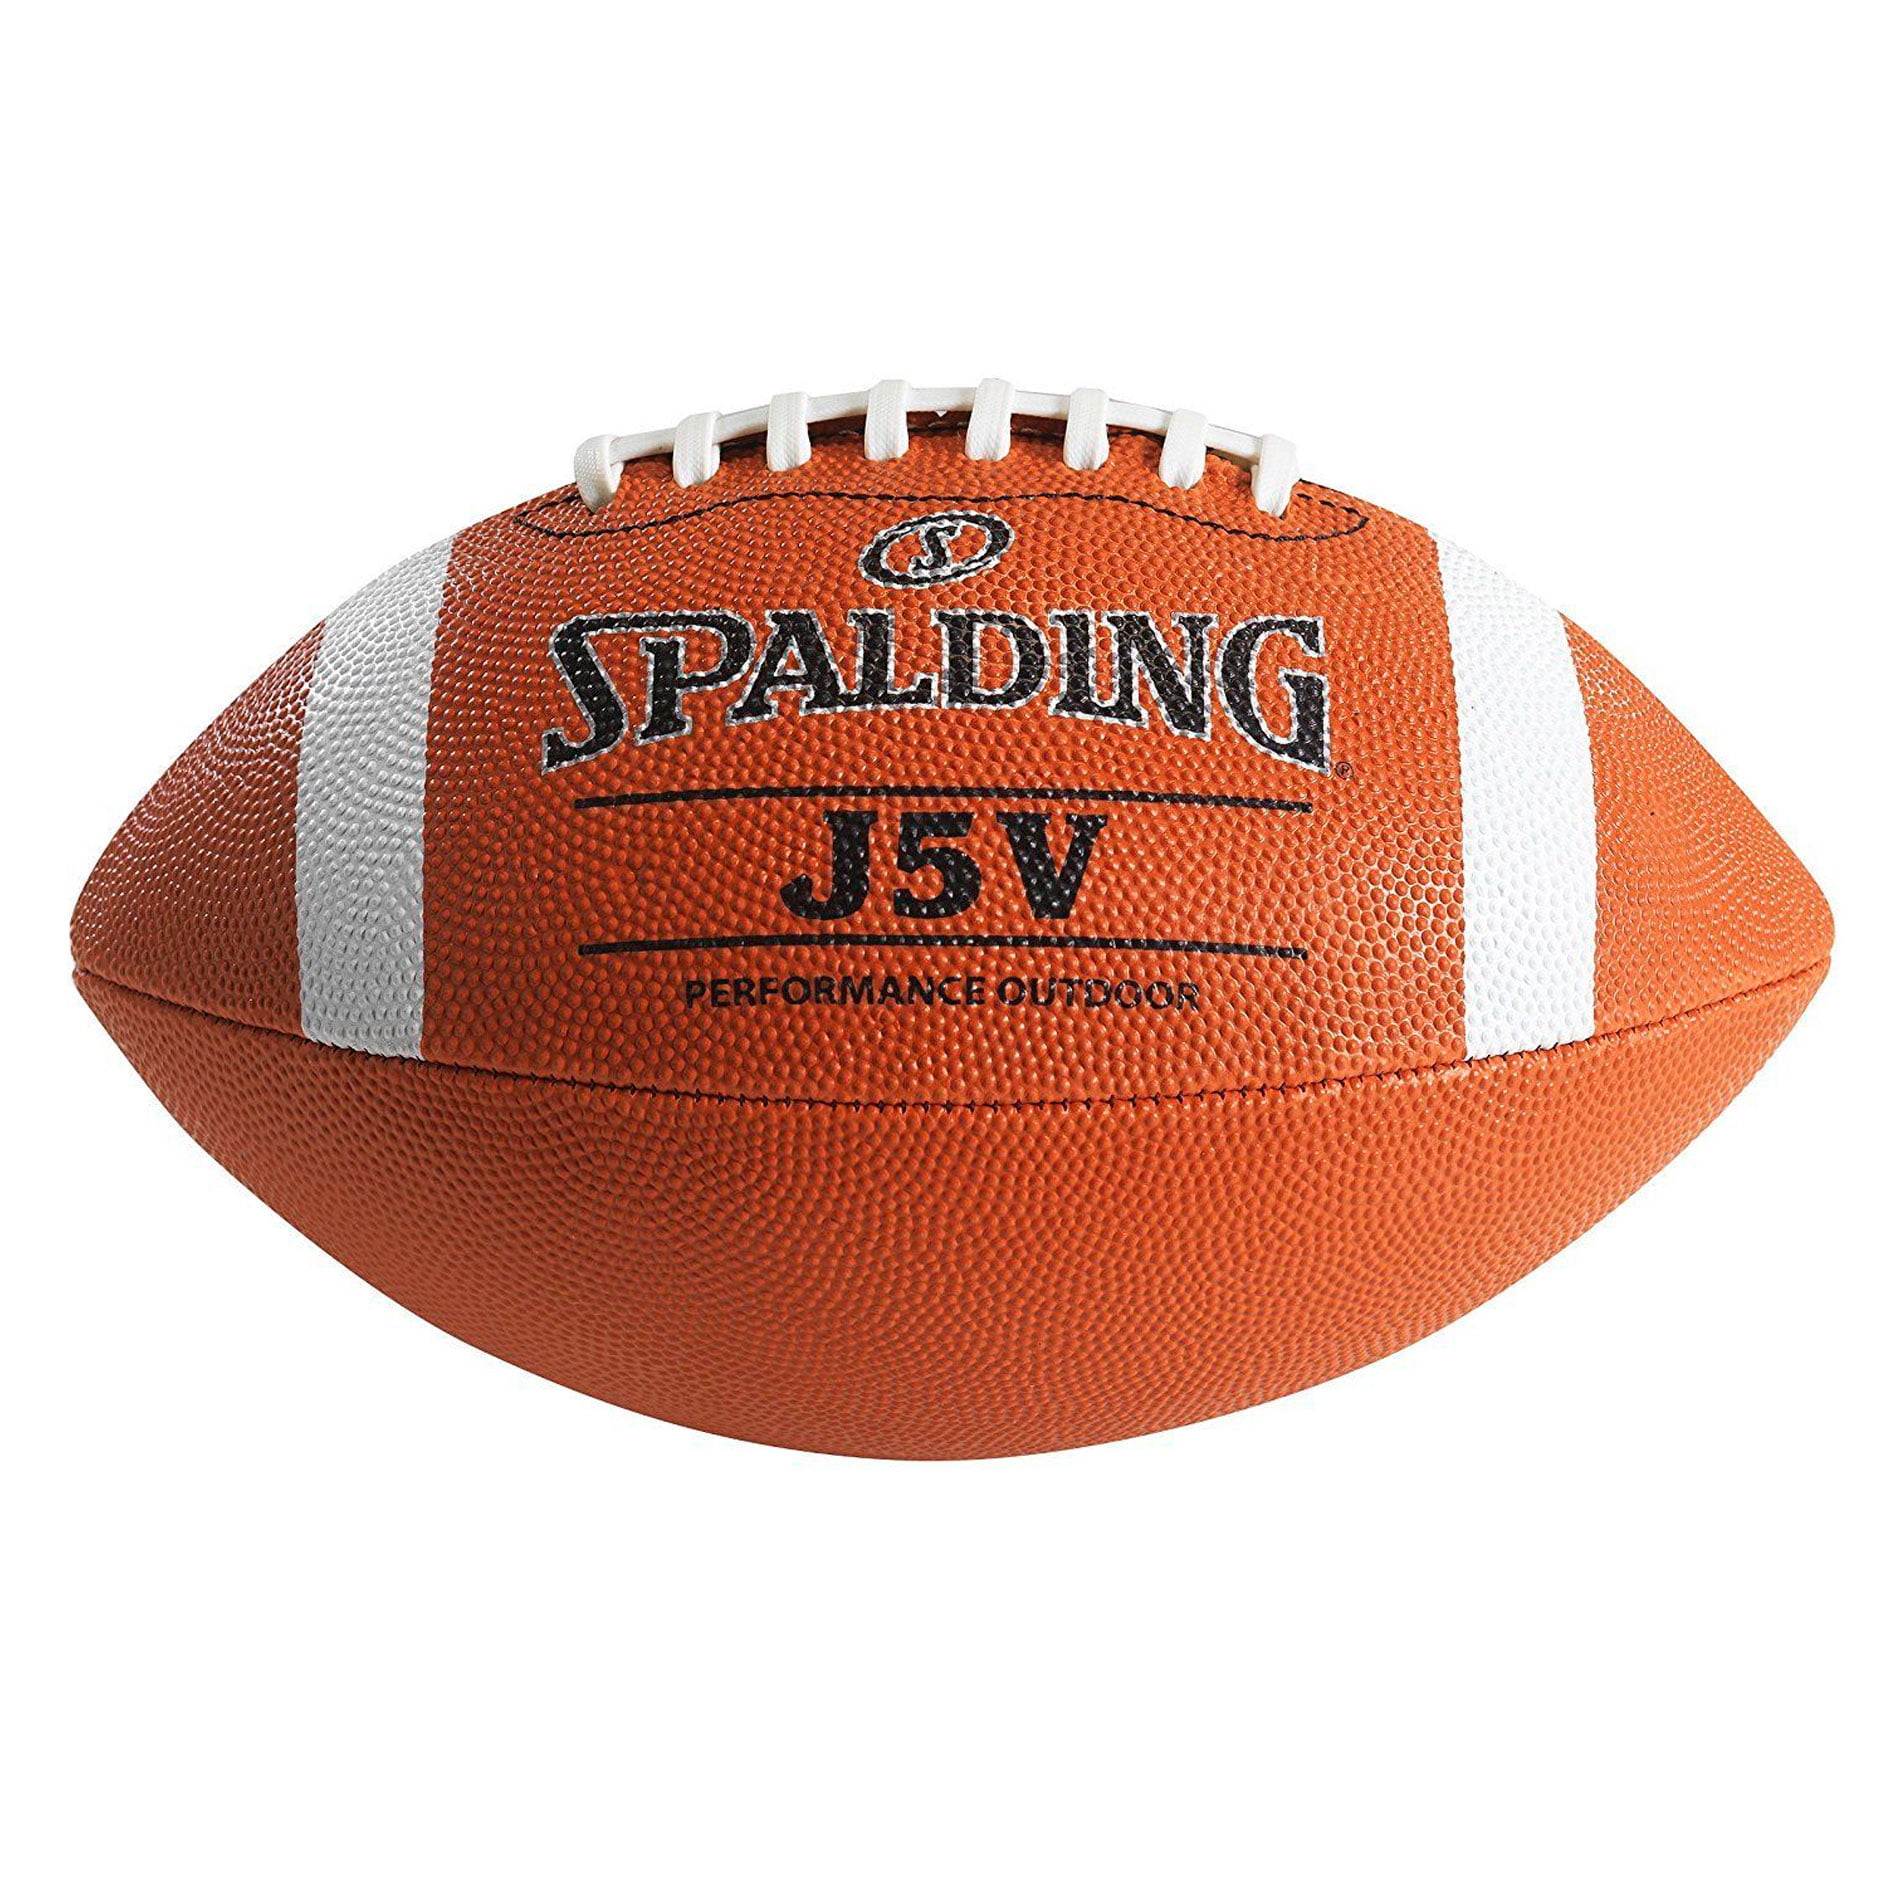 PRO Spalding Official LEATHER Football J5V ADVANCE 